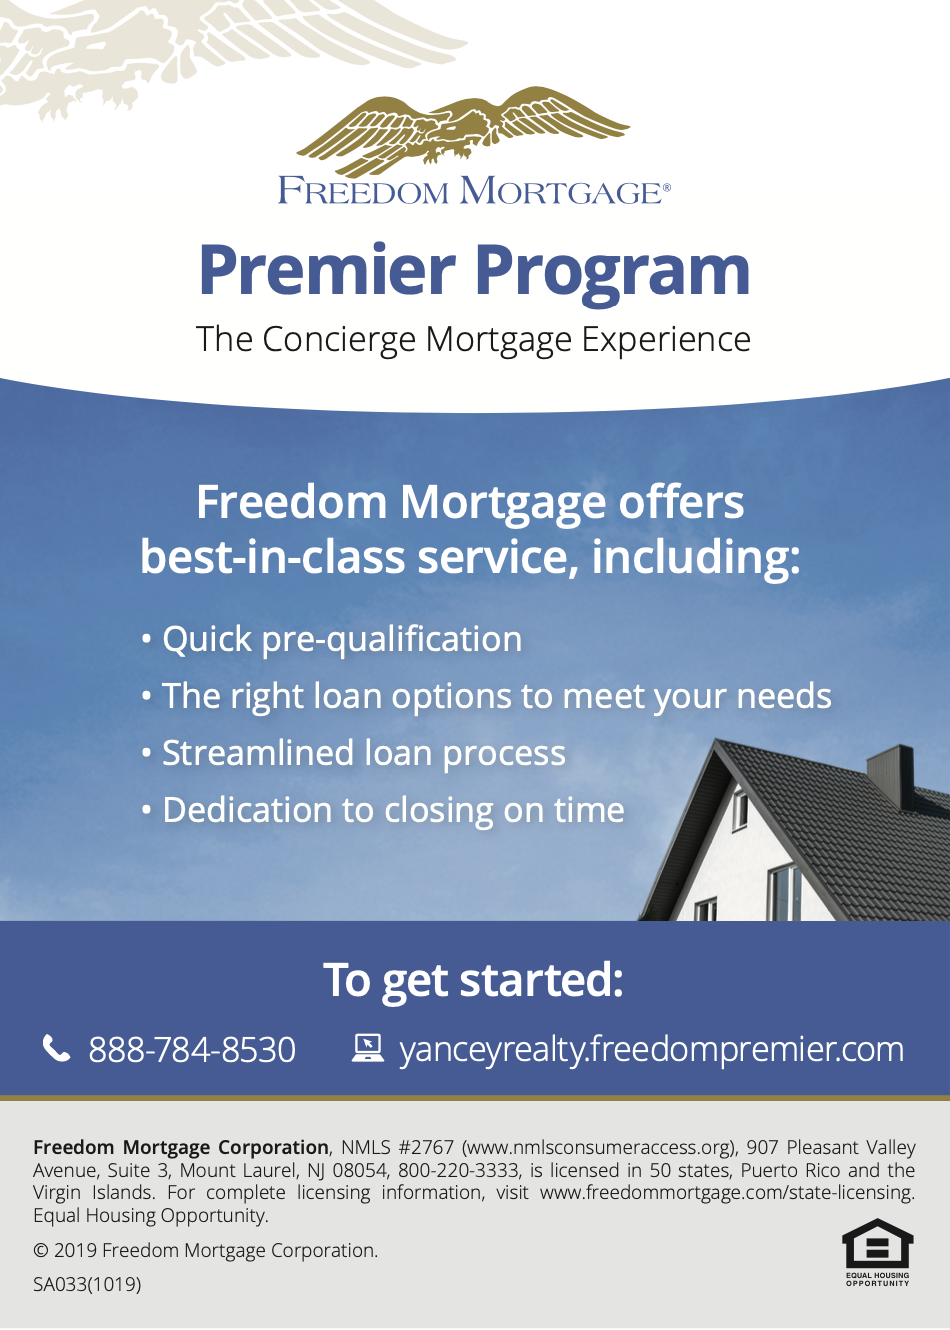 freedom mortgage essay contest